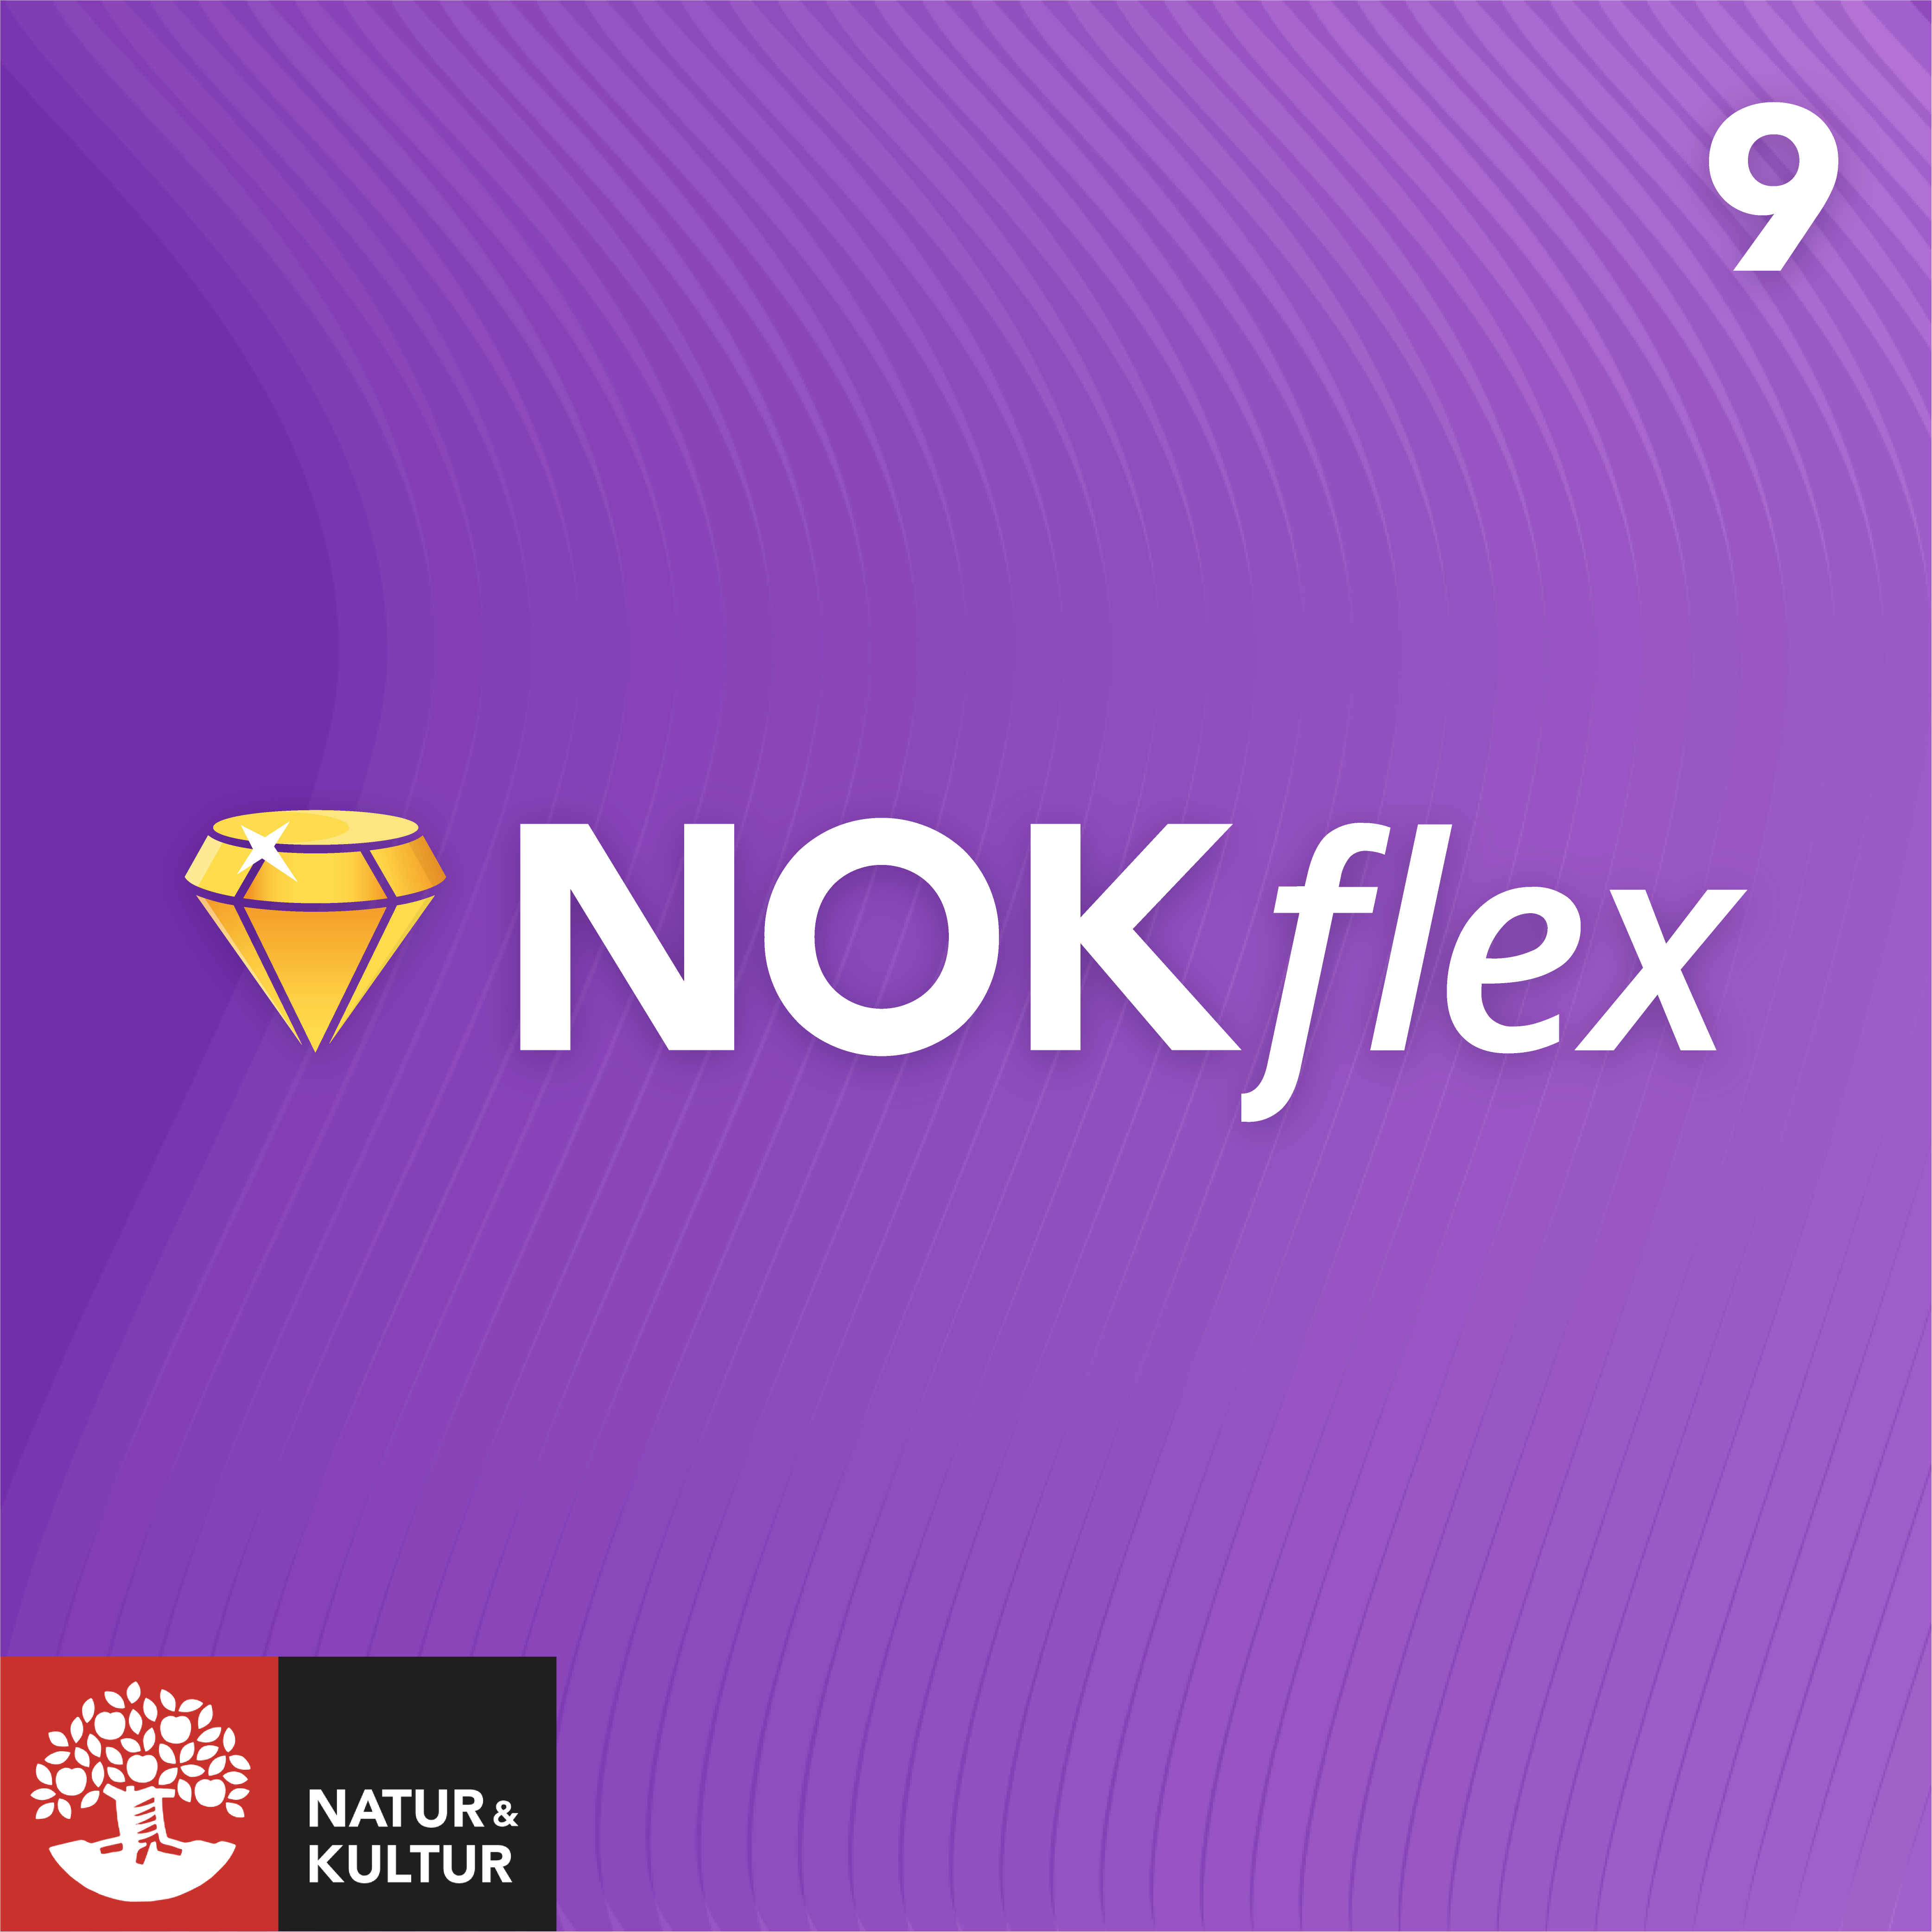 NOKflex Matematik 9, Elev